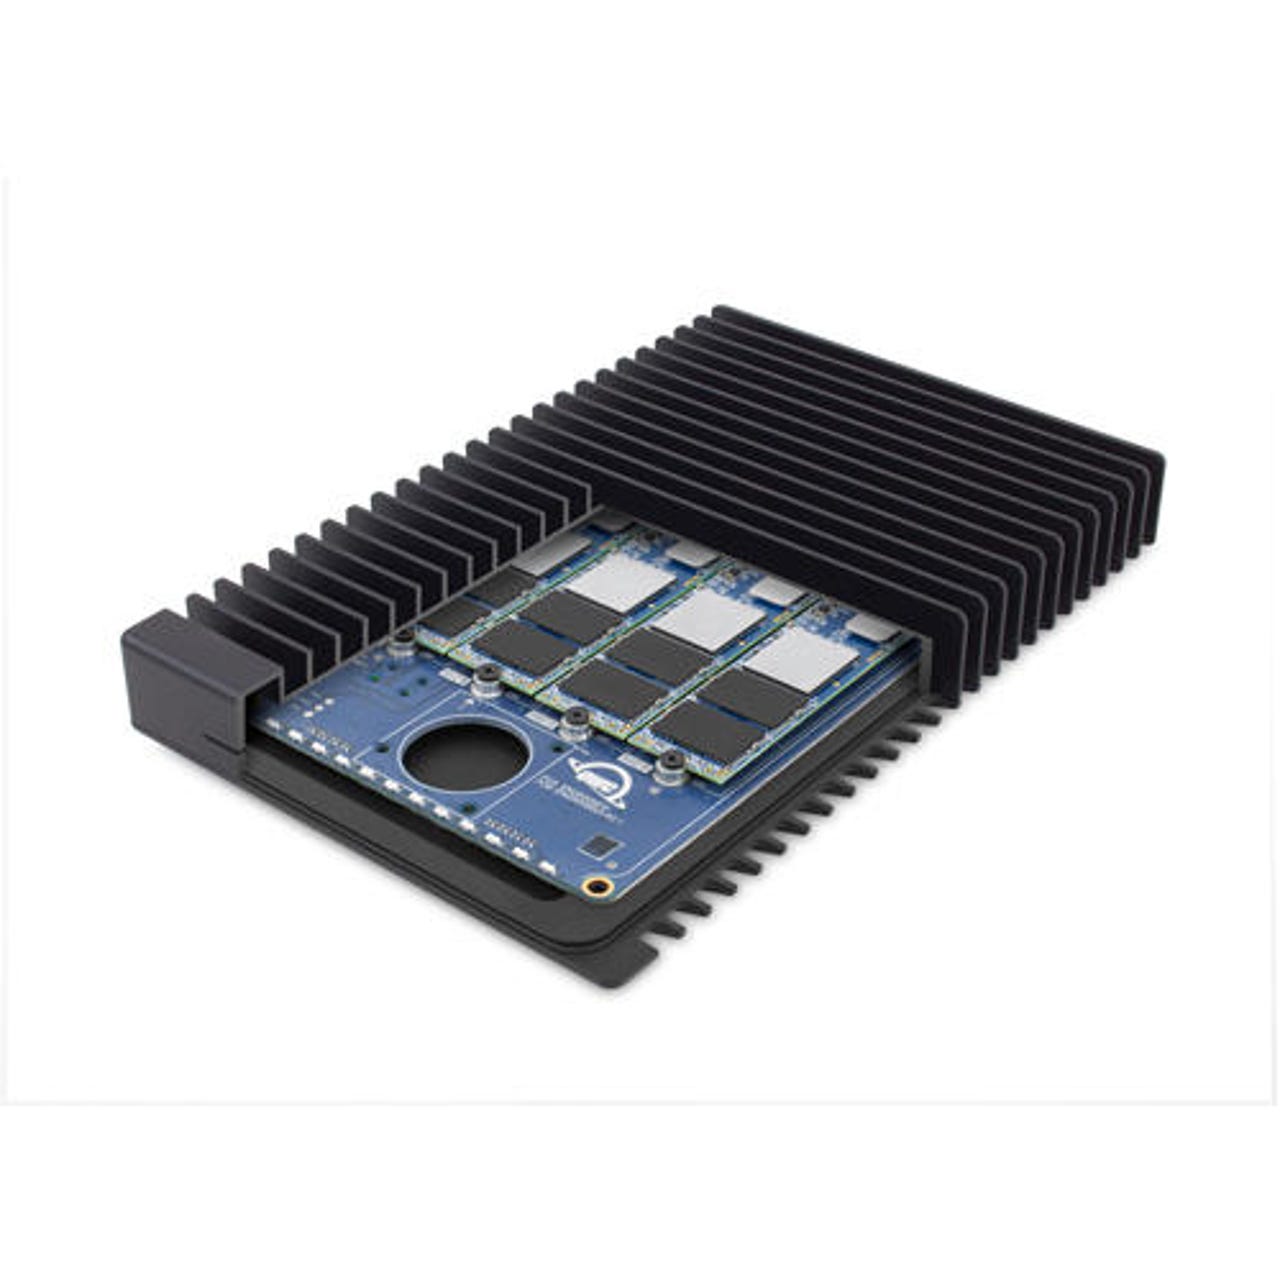 OWC ThunderBlade Gen 2 high-performance external SSD